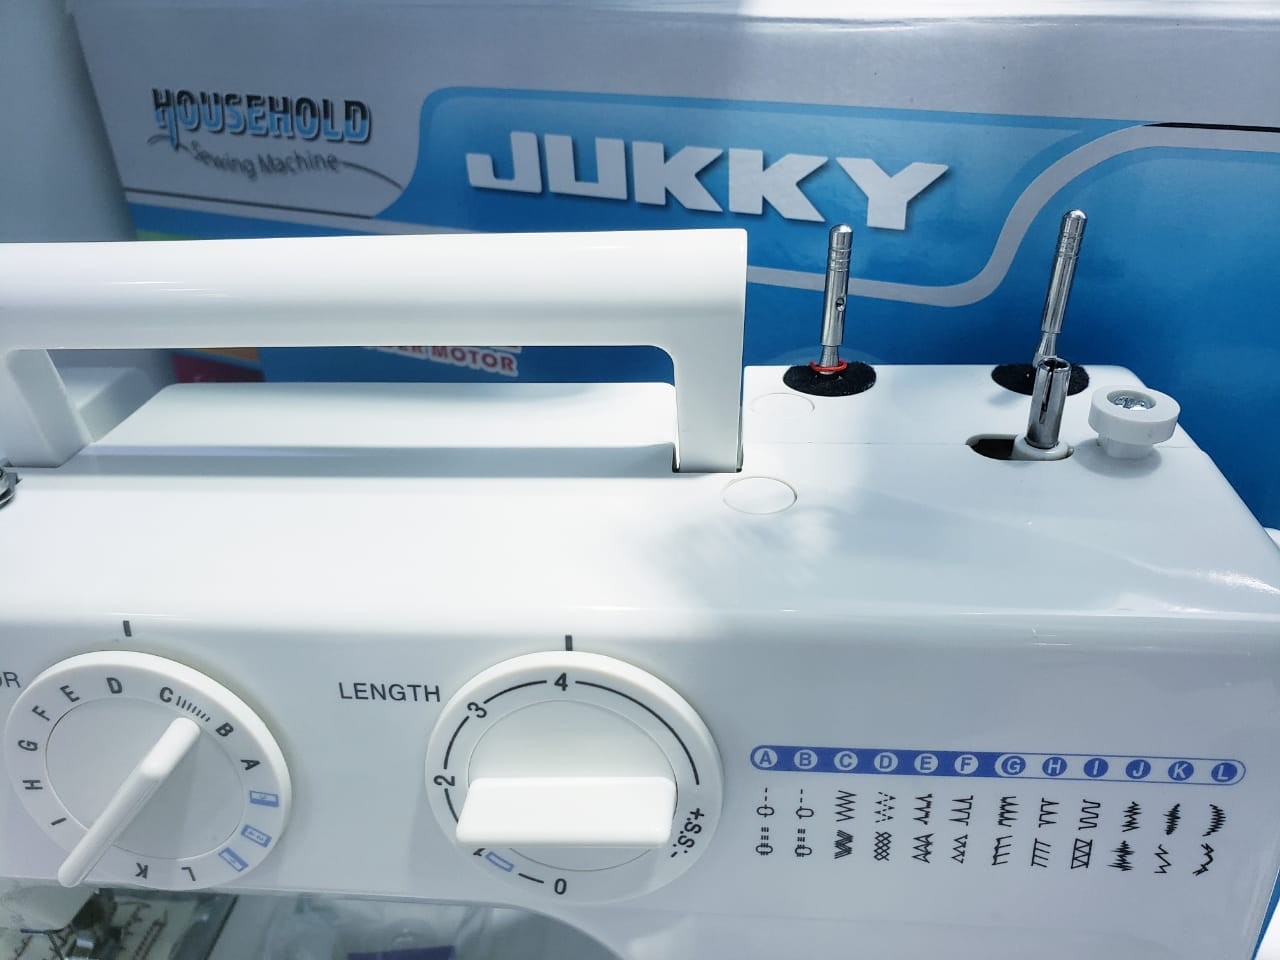 electrodomesticos - Maquina de coser Electrica multifuncional profesional JUKKY FH6224 9